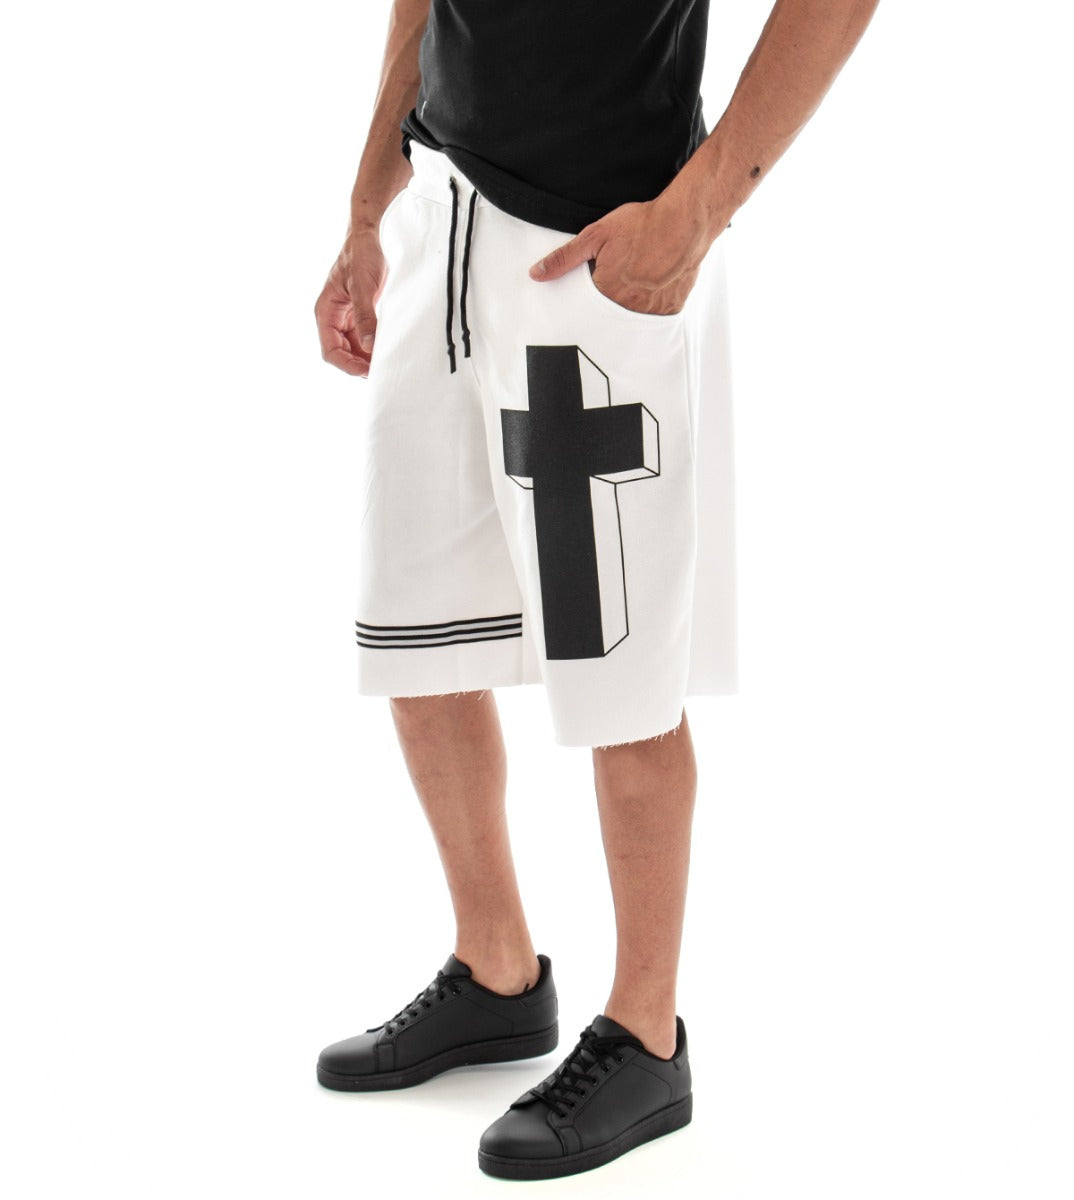 Bermuda Pantaloncino Uomo Uomo Corto Bianco Stampa Croce Elastico GIOSAL-PC1507A